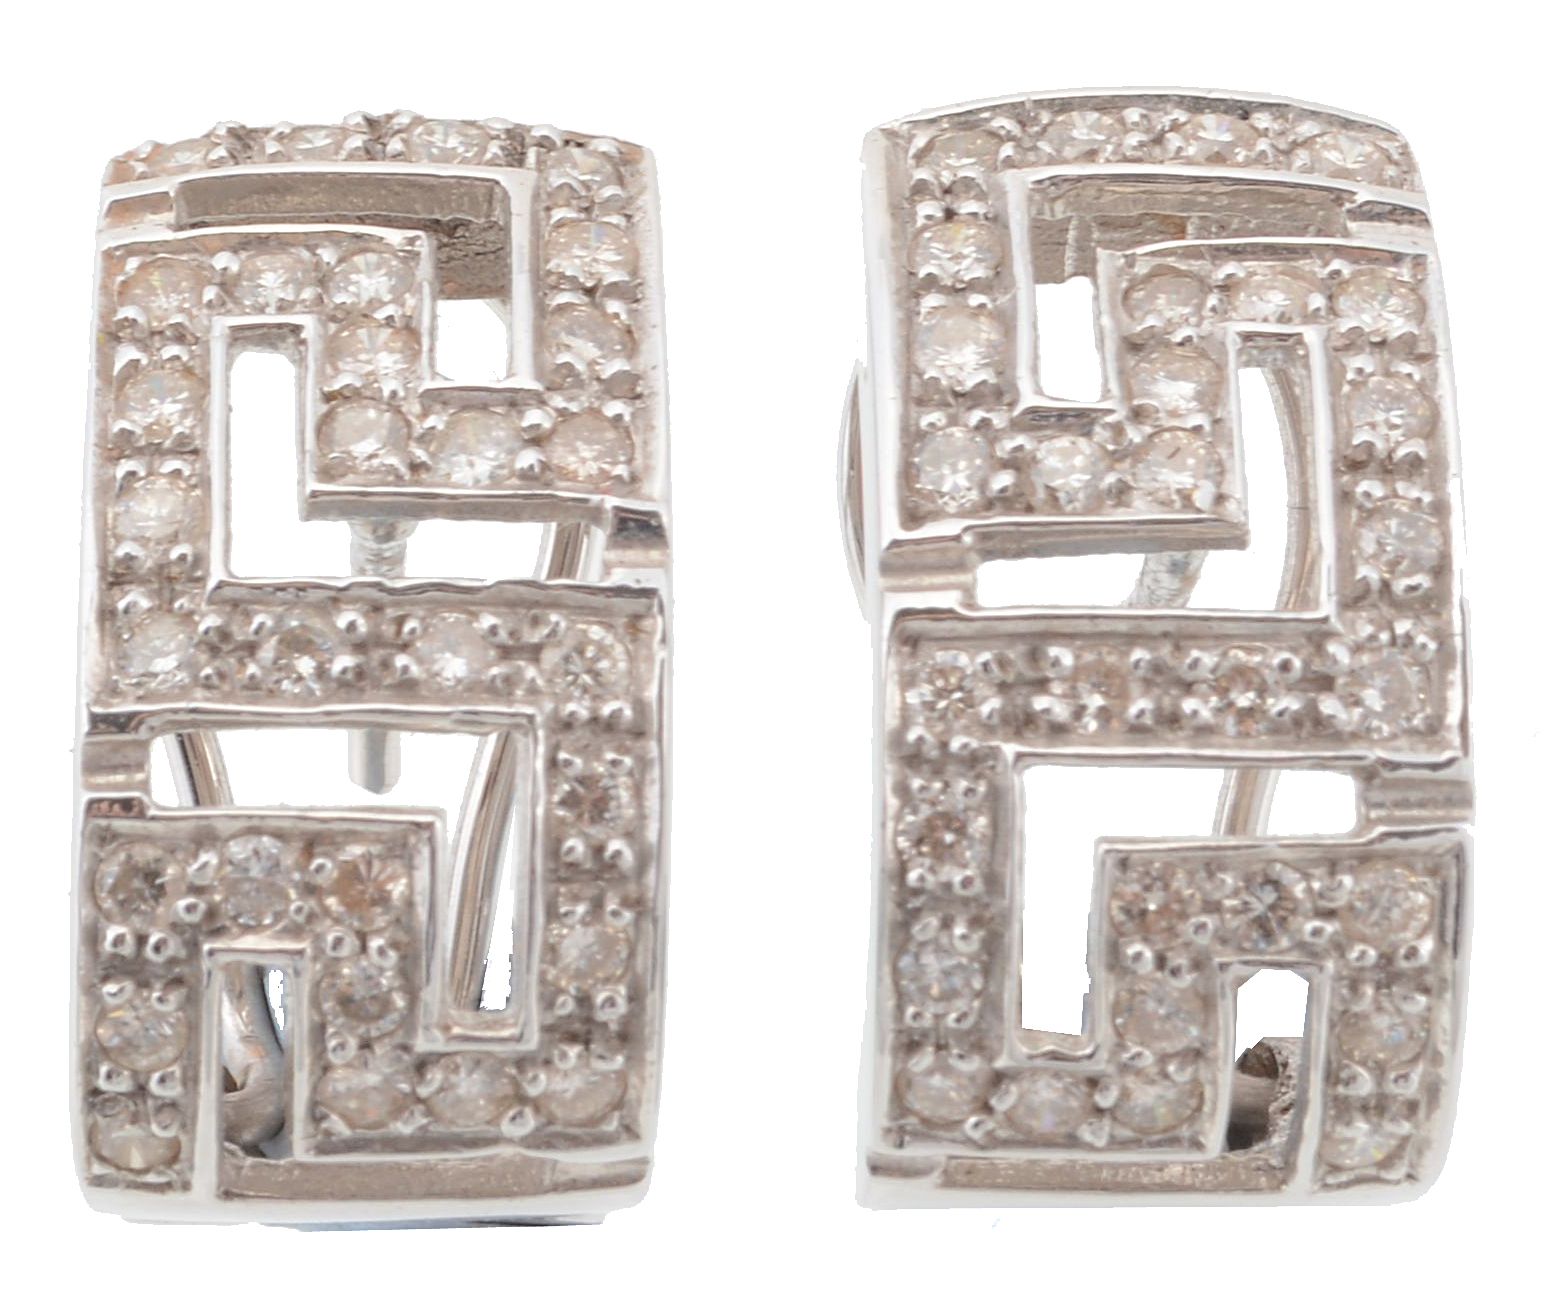 A pair of diamond earrings, of Greek key design  A pair of diamond earrings,   of Greek key design,